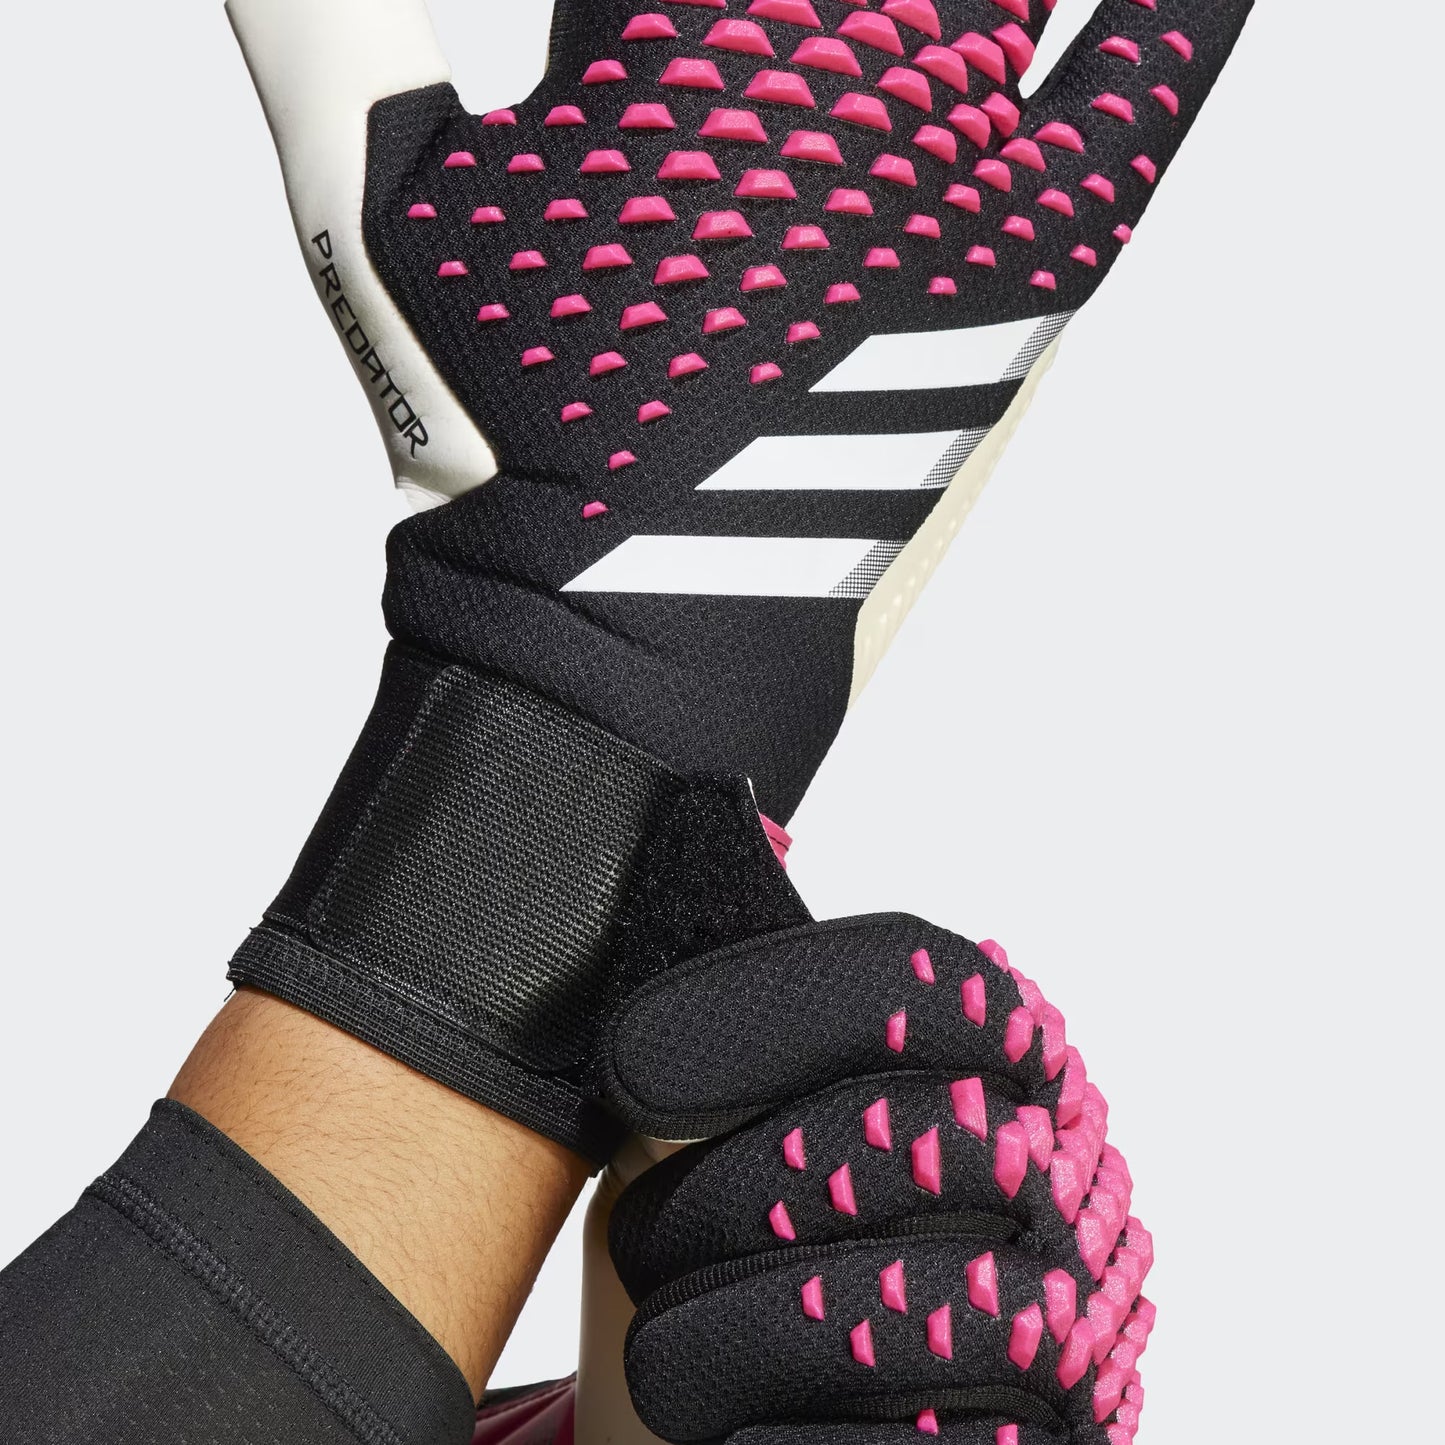 Adidas Predator GL Competition - Black/White/Team Shock Pink